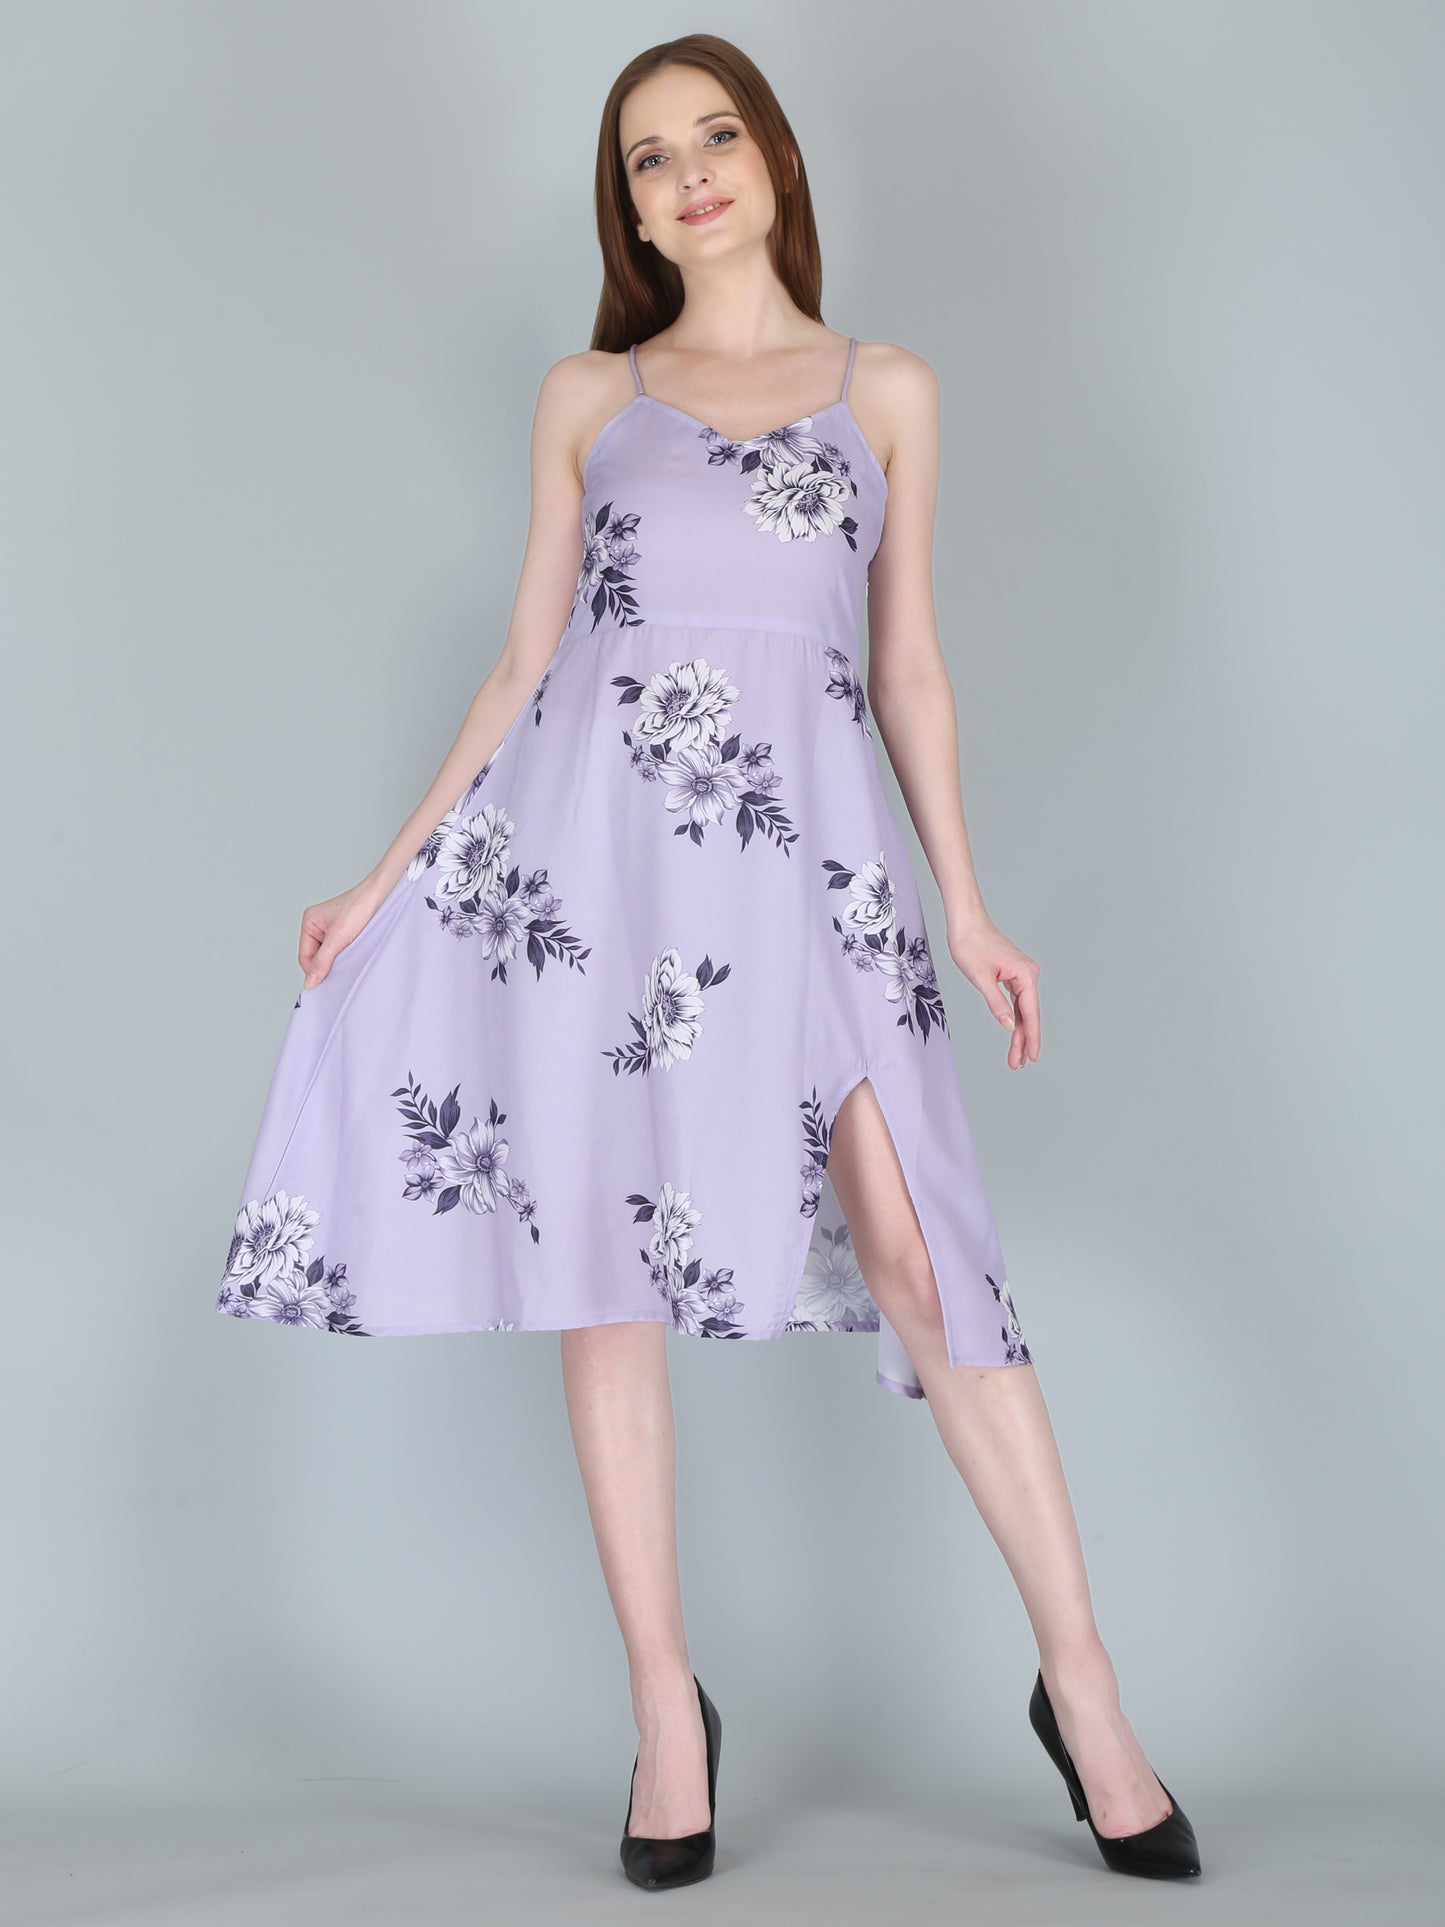 Lilac flared dress